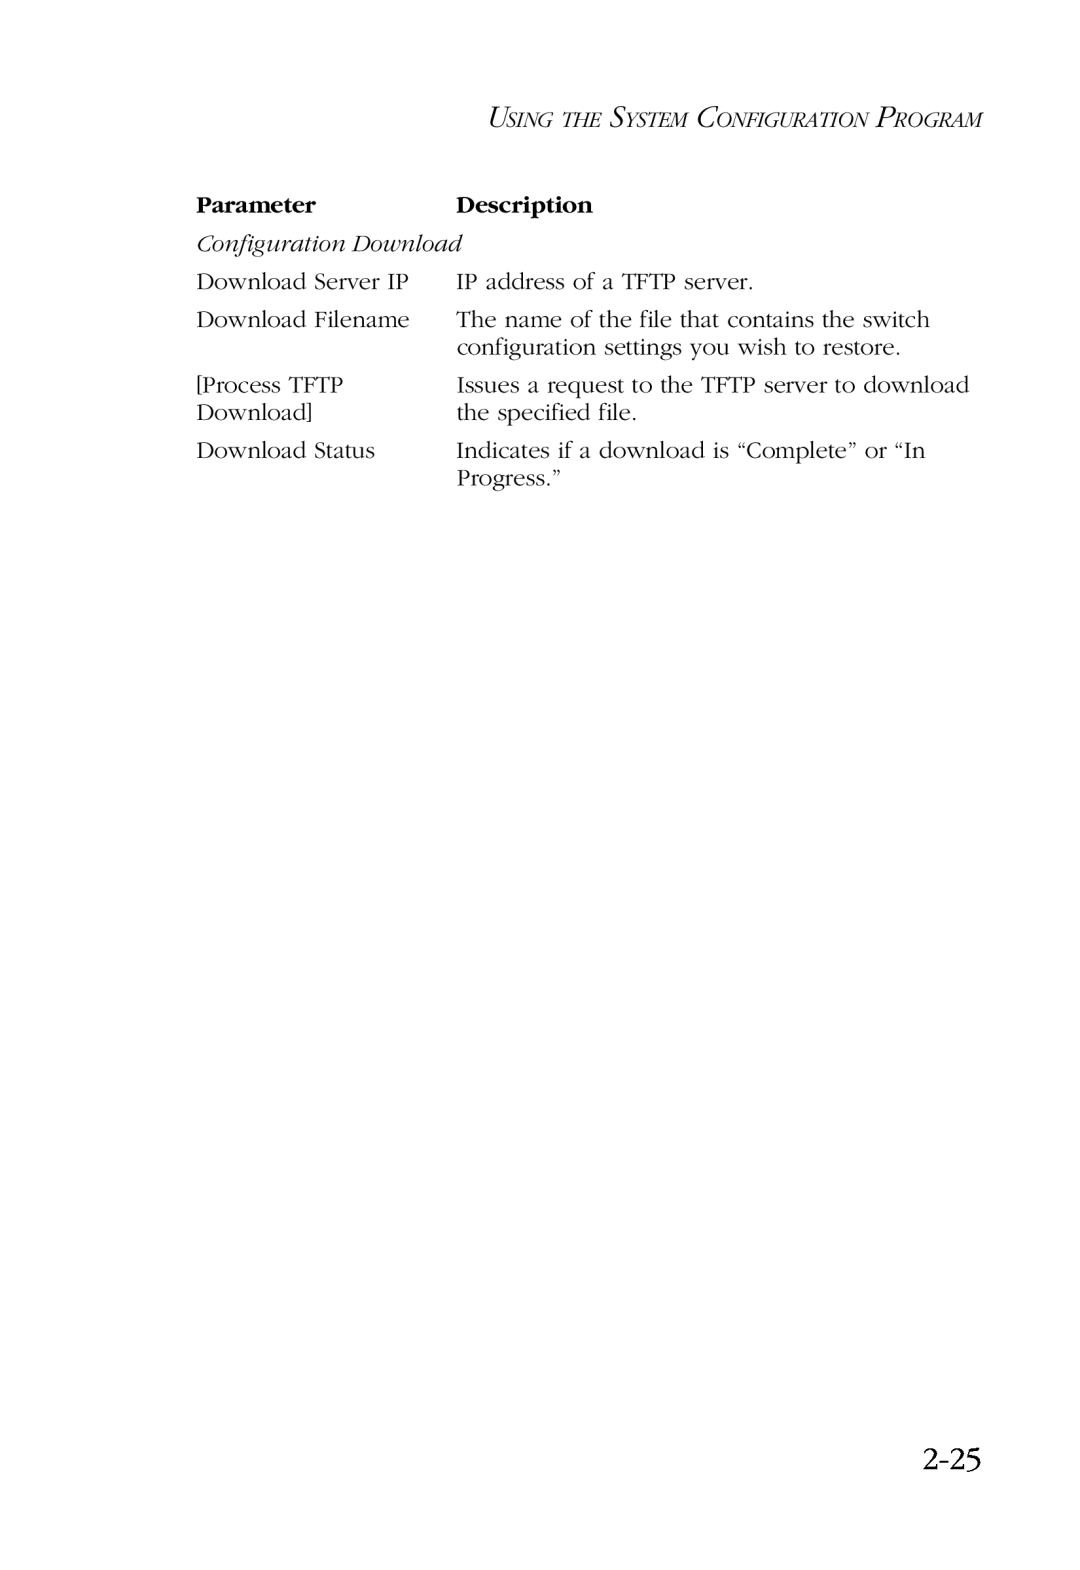 SMC Networks SMC6924VF manual 2-25, Parameter, Description 